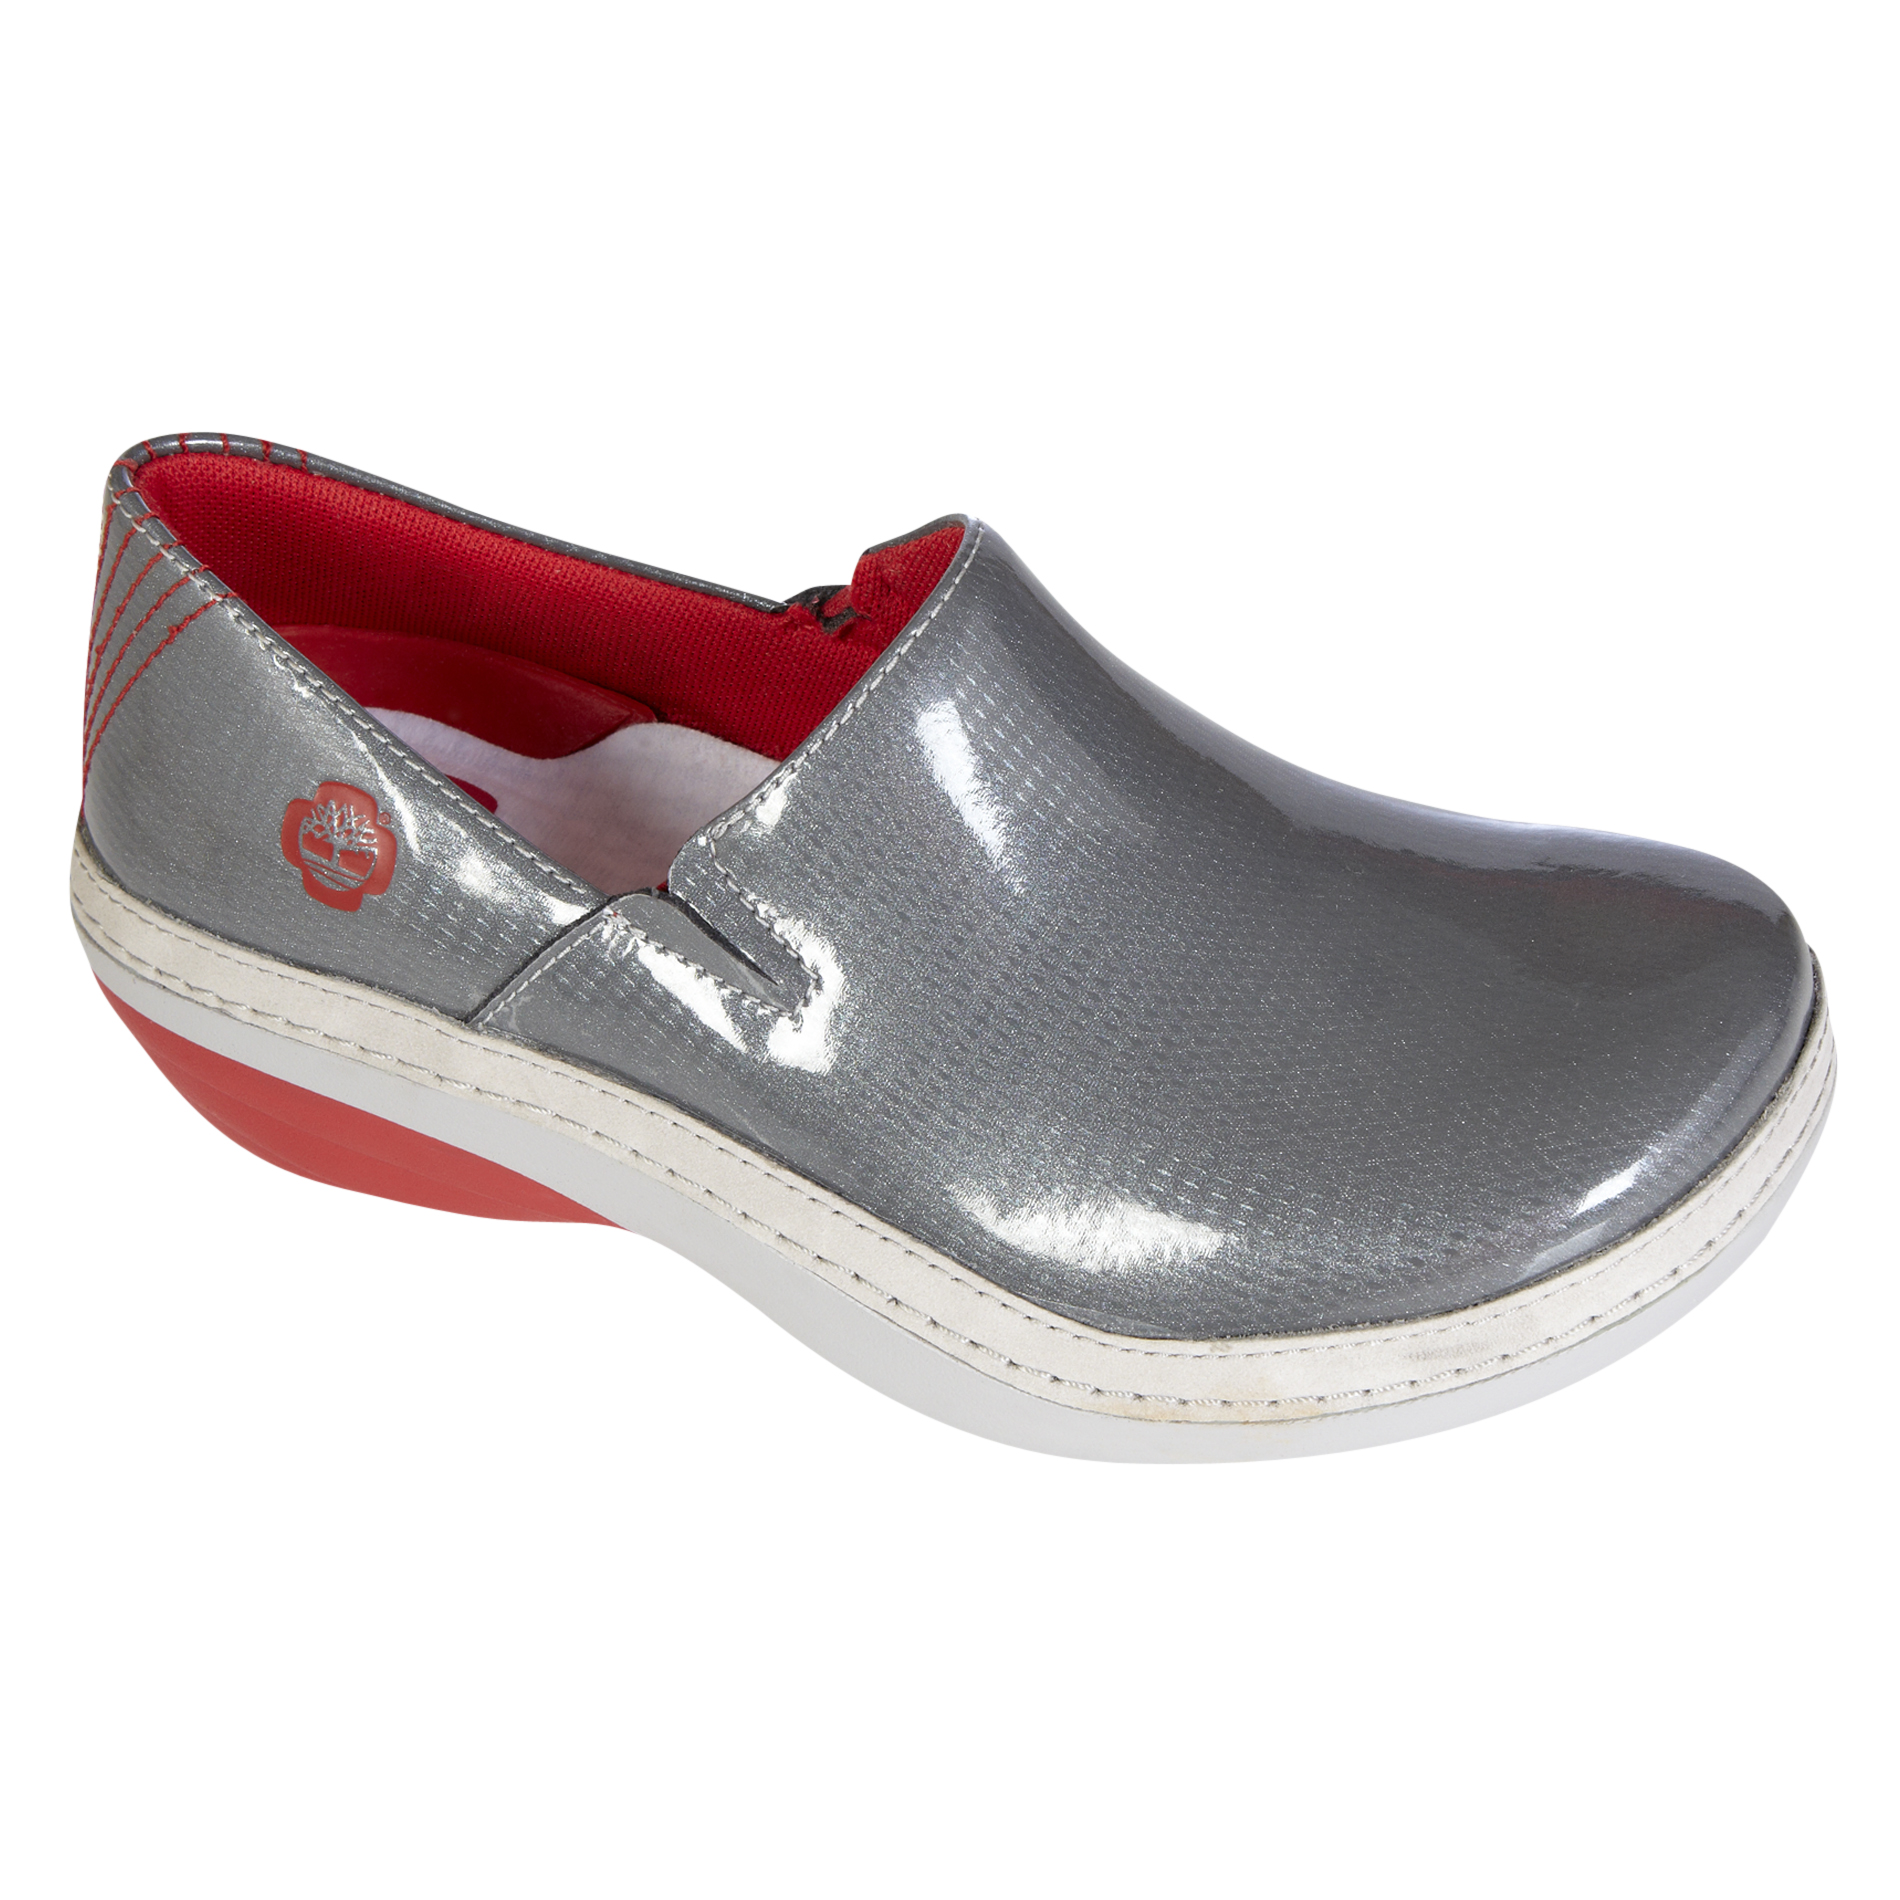 Timberland PRO Women's Slip-Resistant Work Shoe Profession - Grey